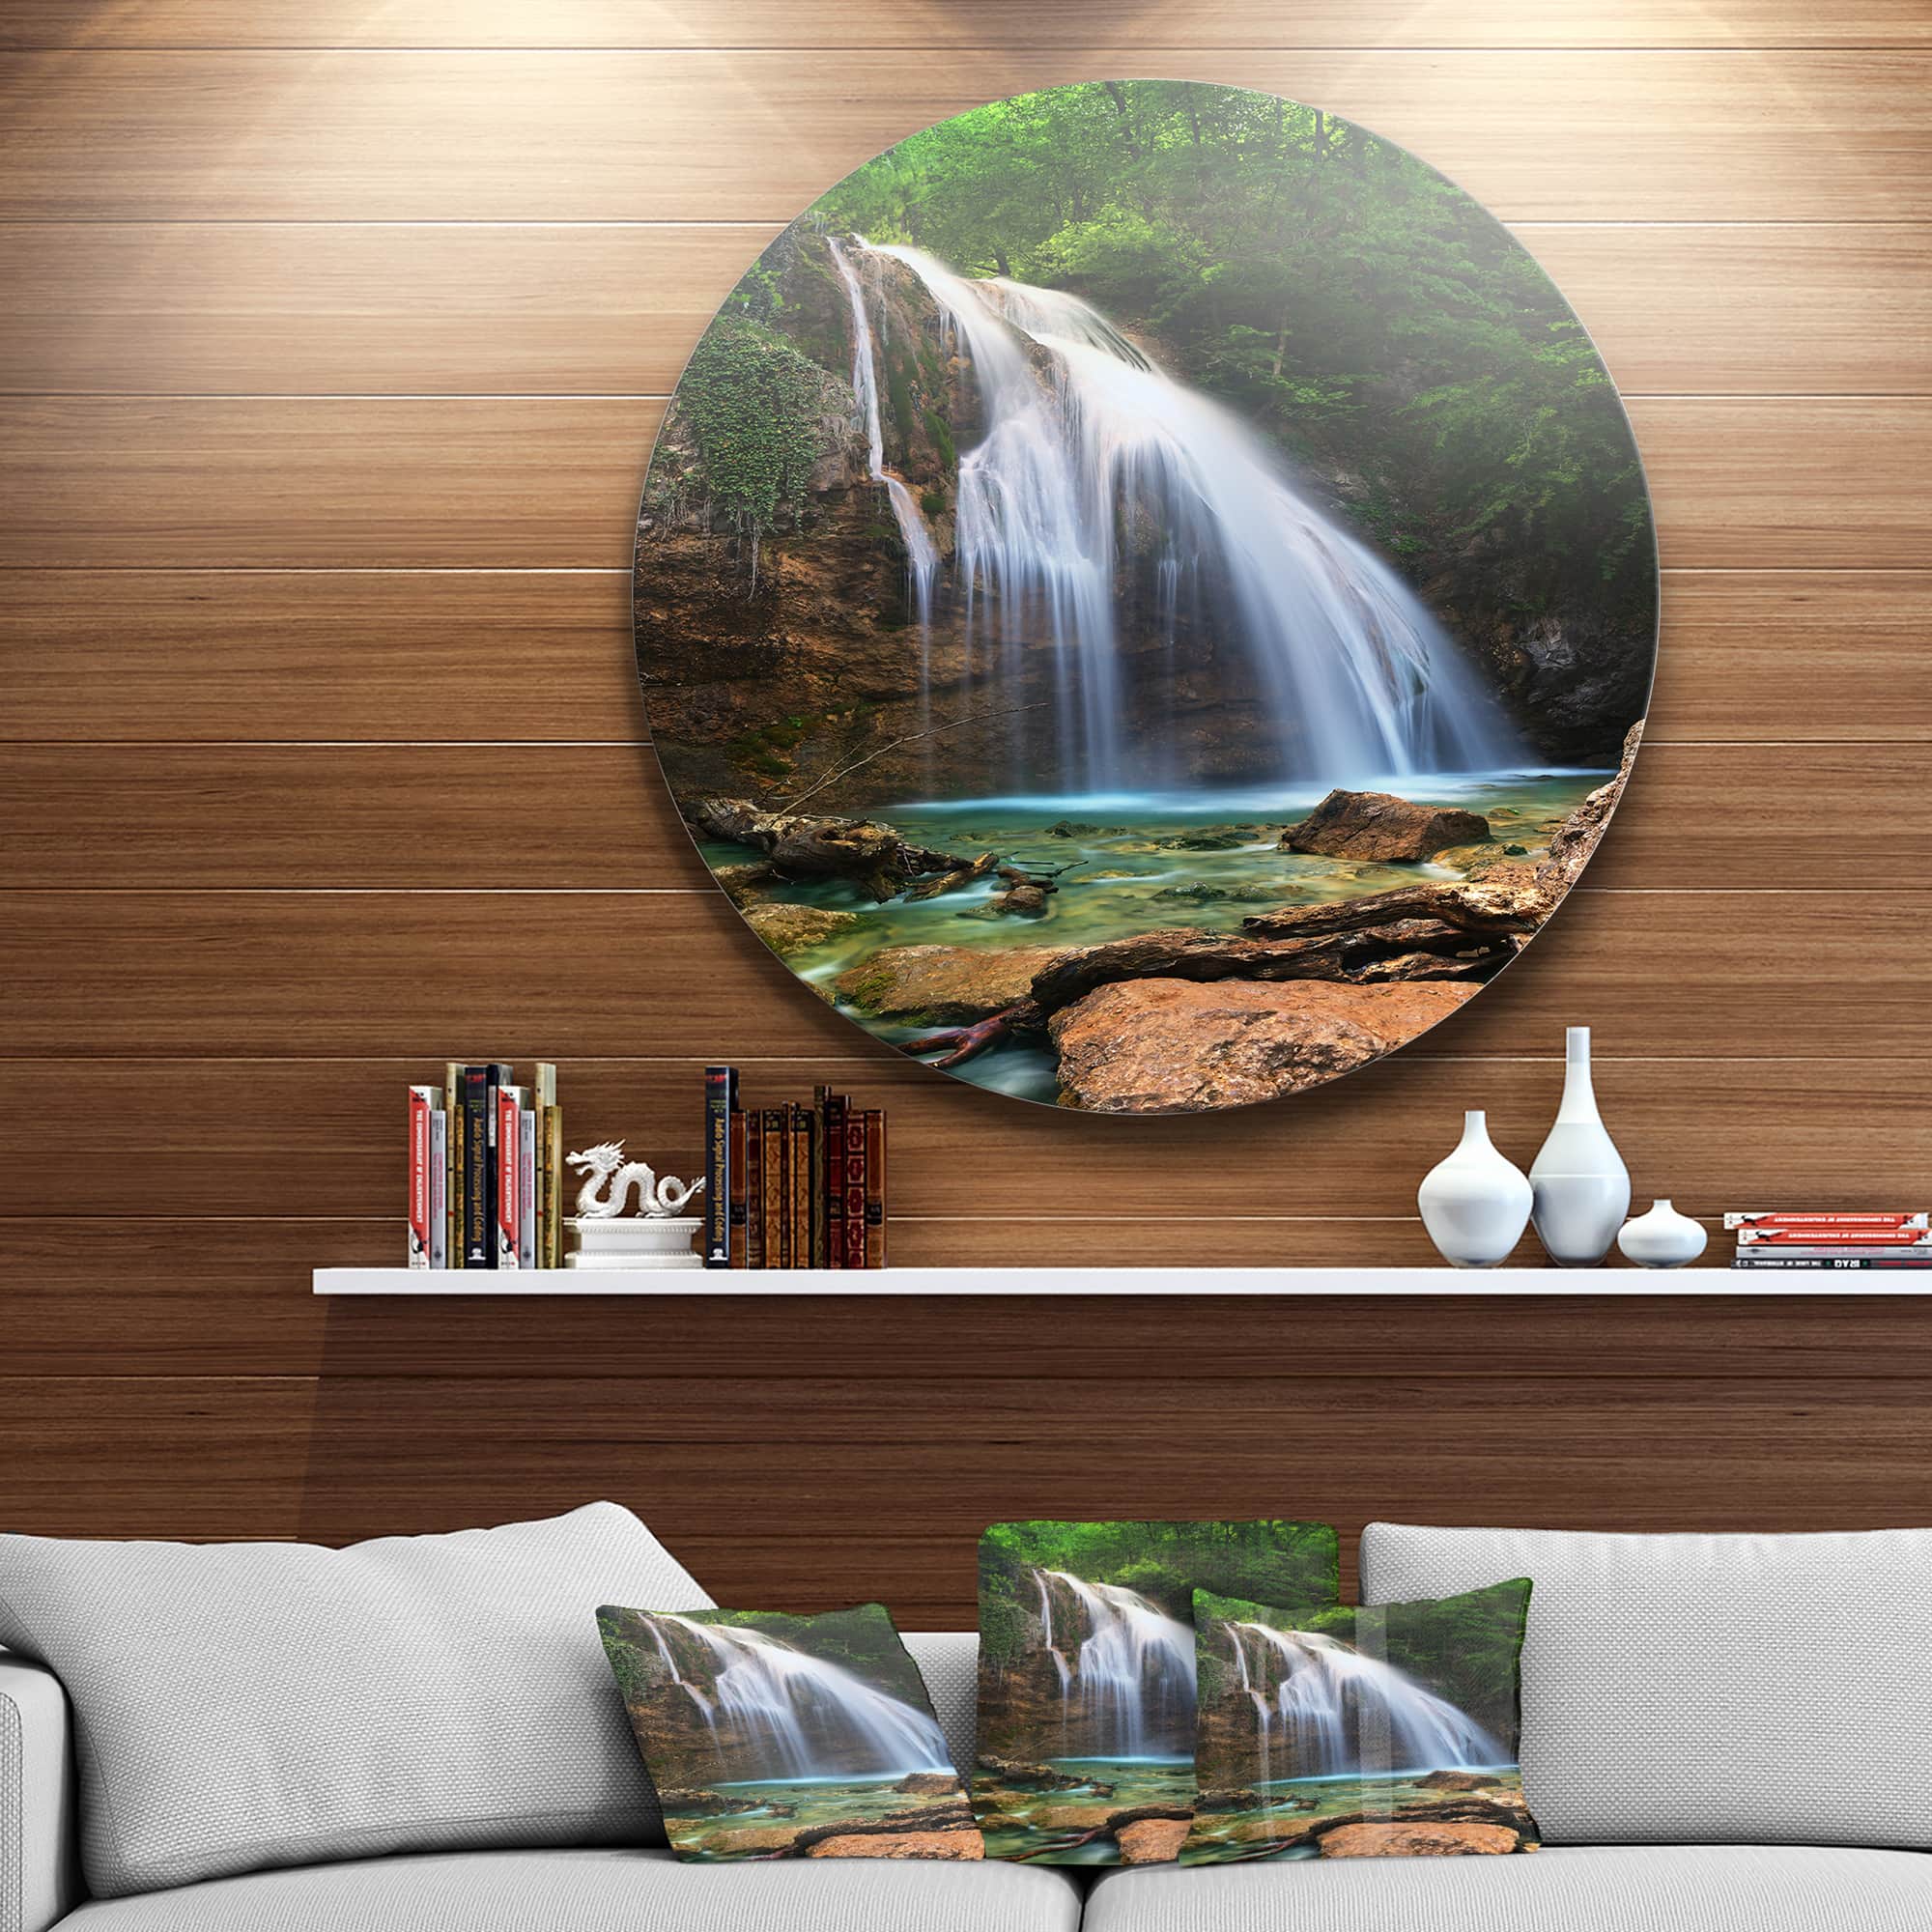 Designart - Djur Djur Waterfall&#x27; Landscape Photography Circle Metal Wall Art